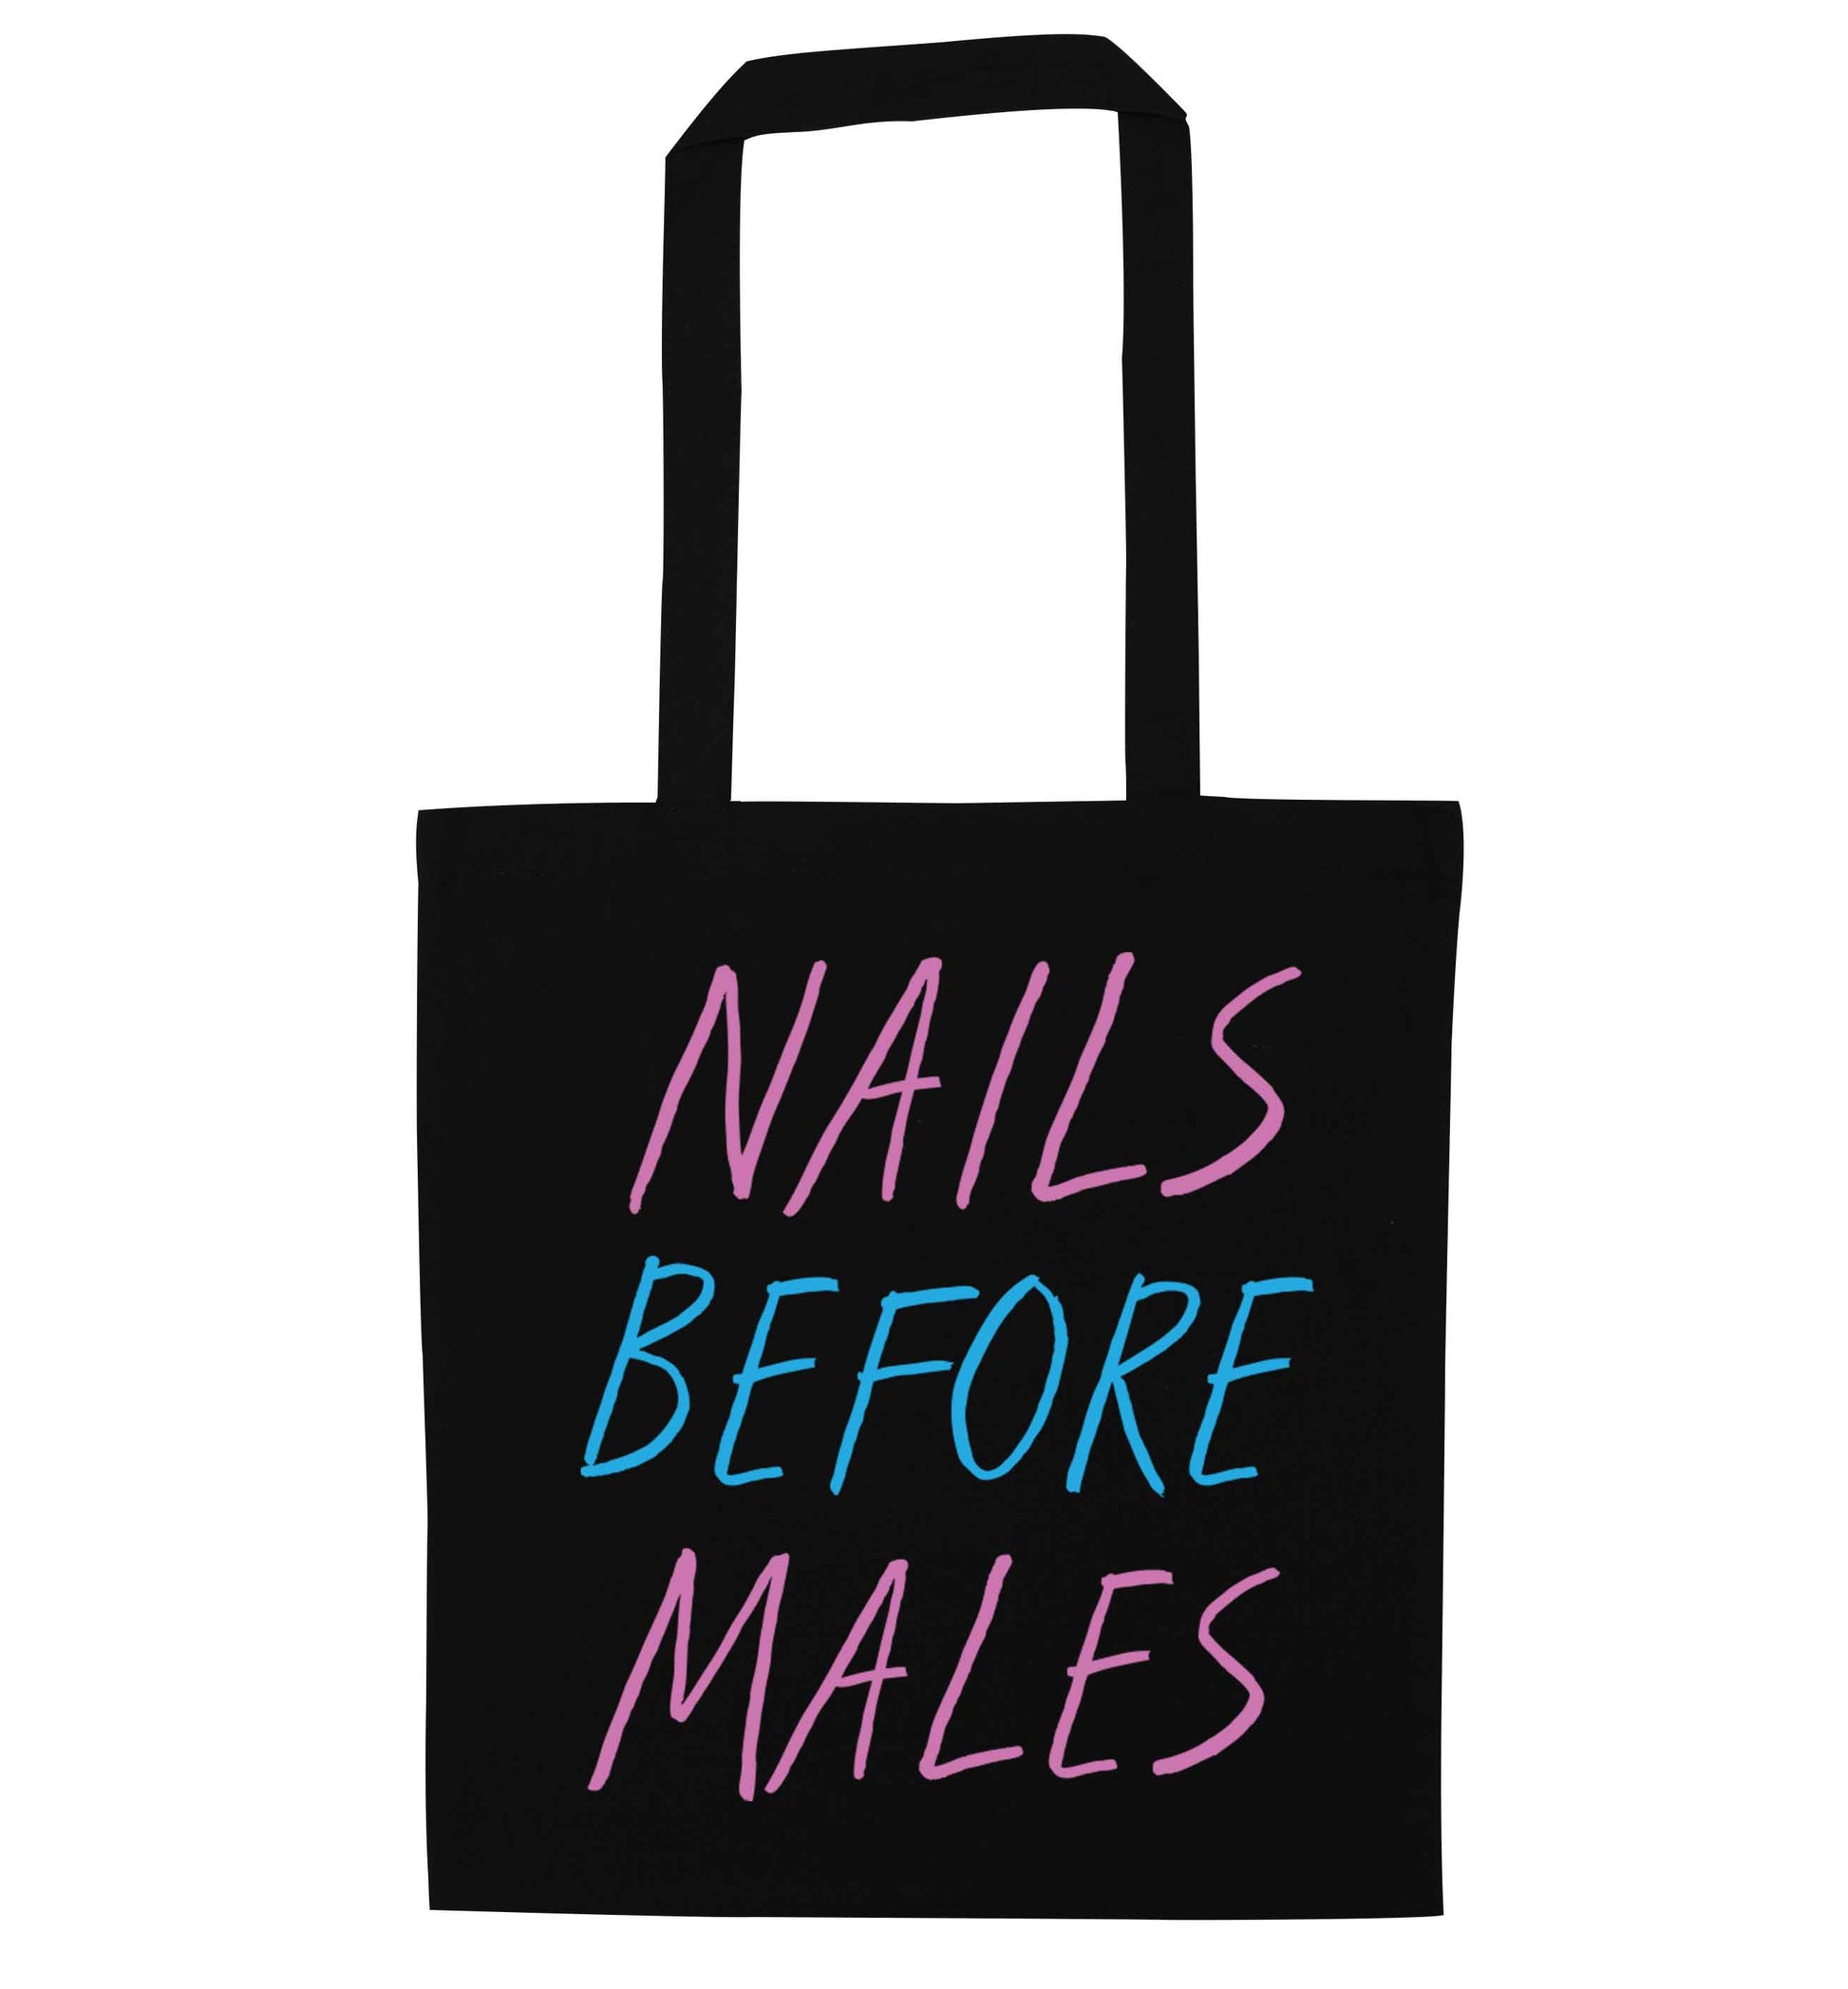 Nails before males black tote bag